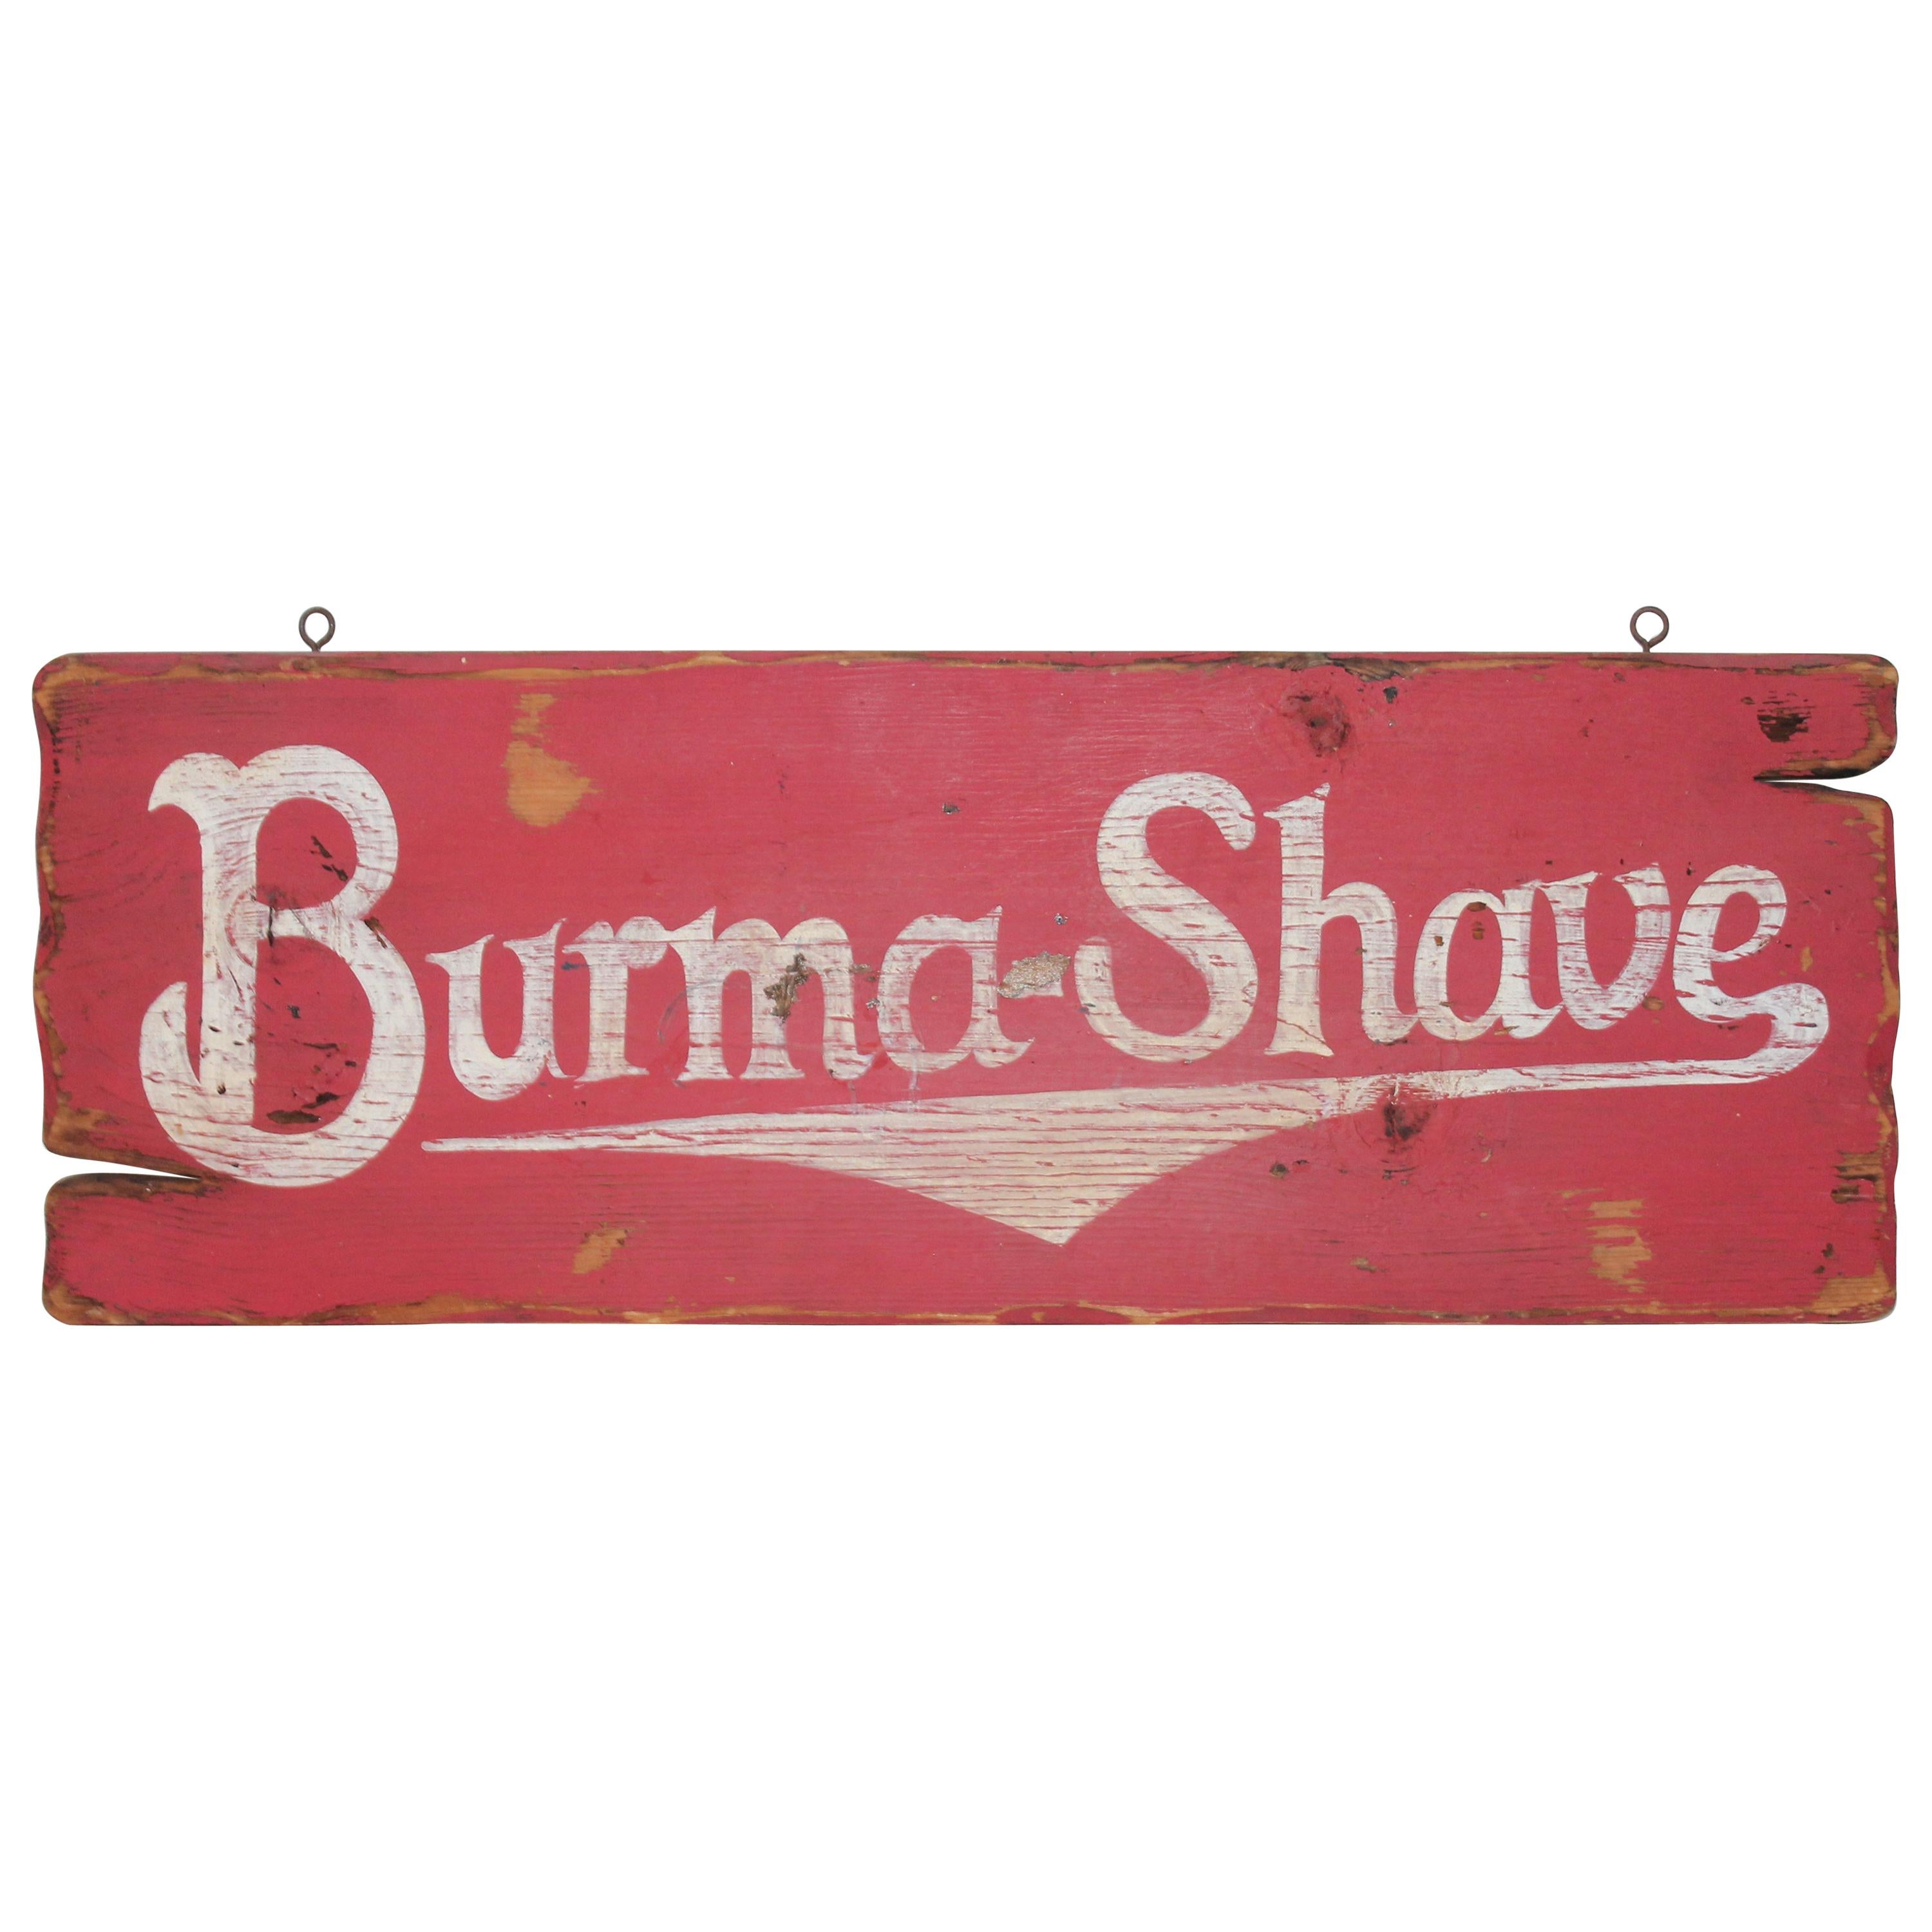 Burma Shave Trade Sign